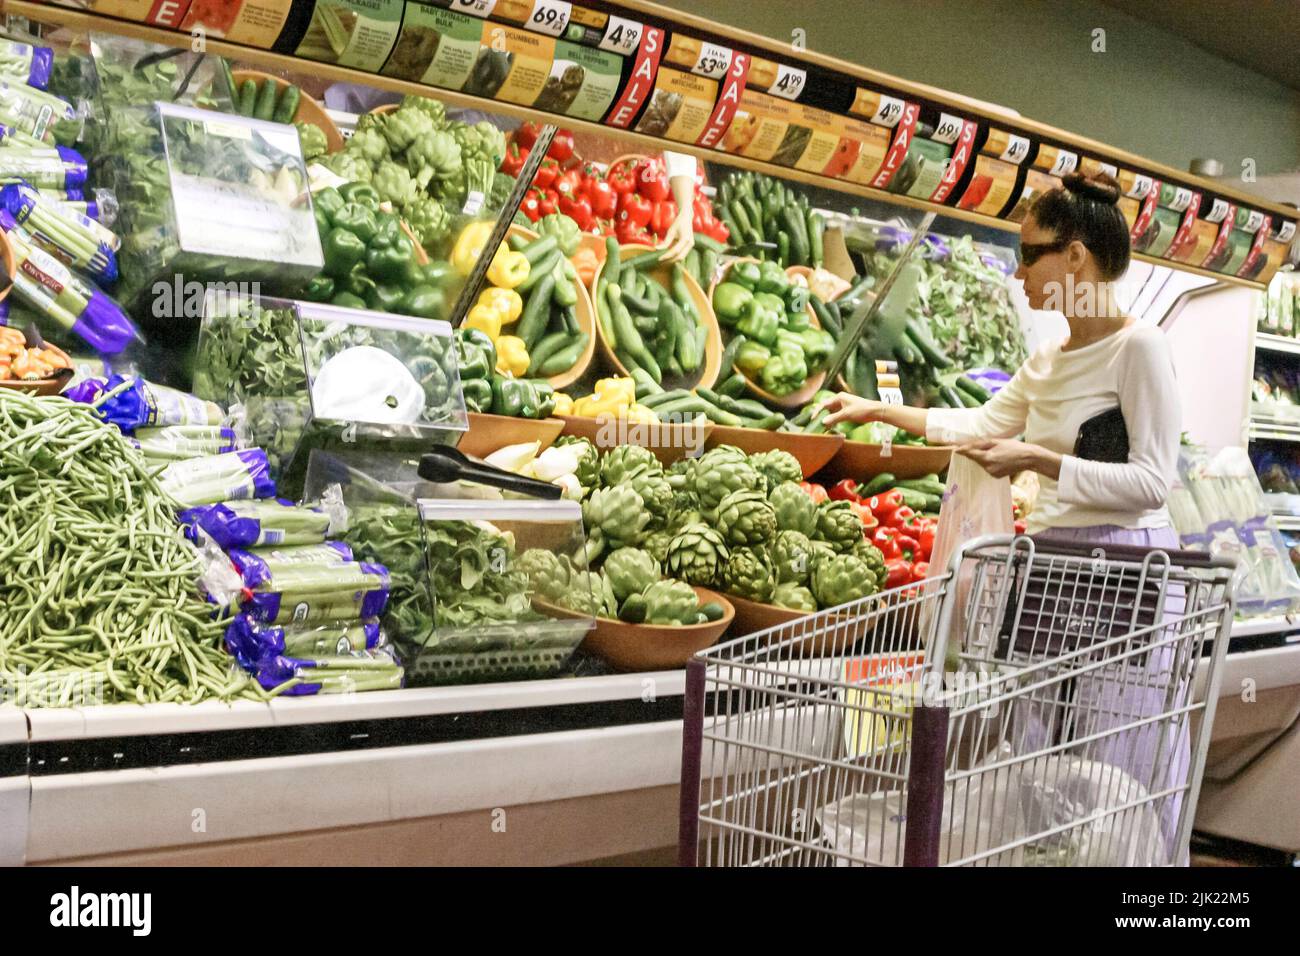 Miami Beach Florida, Publix Lebensmittelgeschäft Lebensmittel Supermarkt Lebensmittel einkaufen Shopper Marktplatz kaufen verkaufen produzieren Gemüse Gemüse Gemüse Gemüse, Verkauf anzeigen Stockfoto